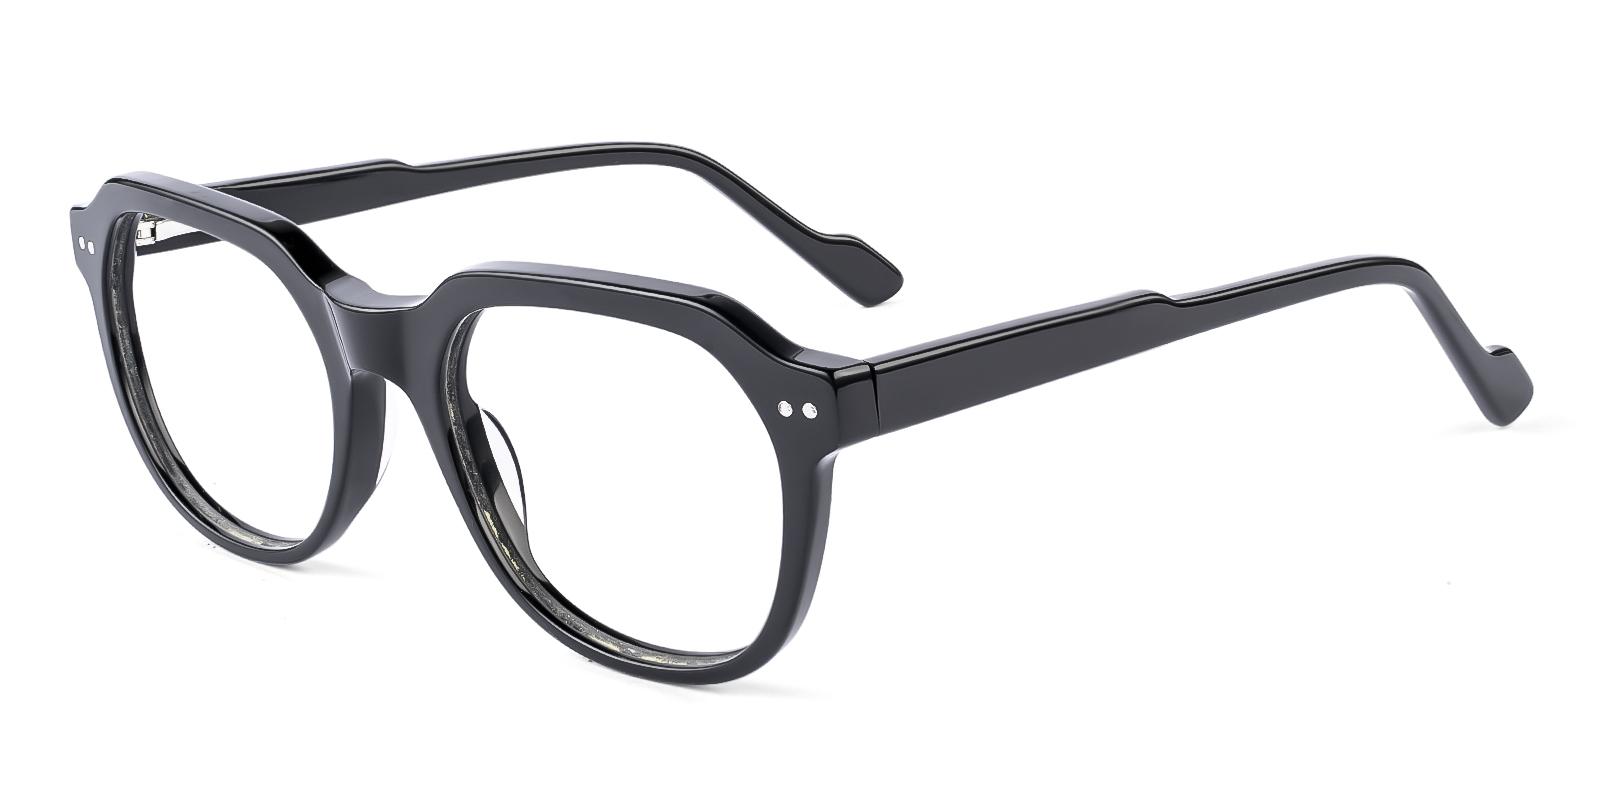 Sarcoress Black Acetate Eyeglasses , SpringHinges , UniversalBridgeFit Frames from ABBE Glasses